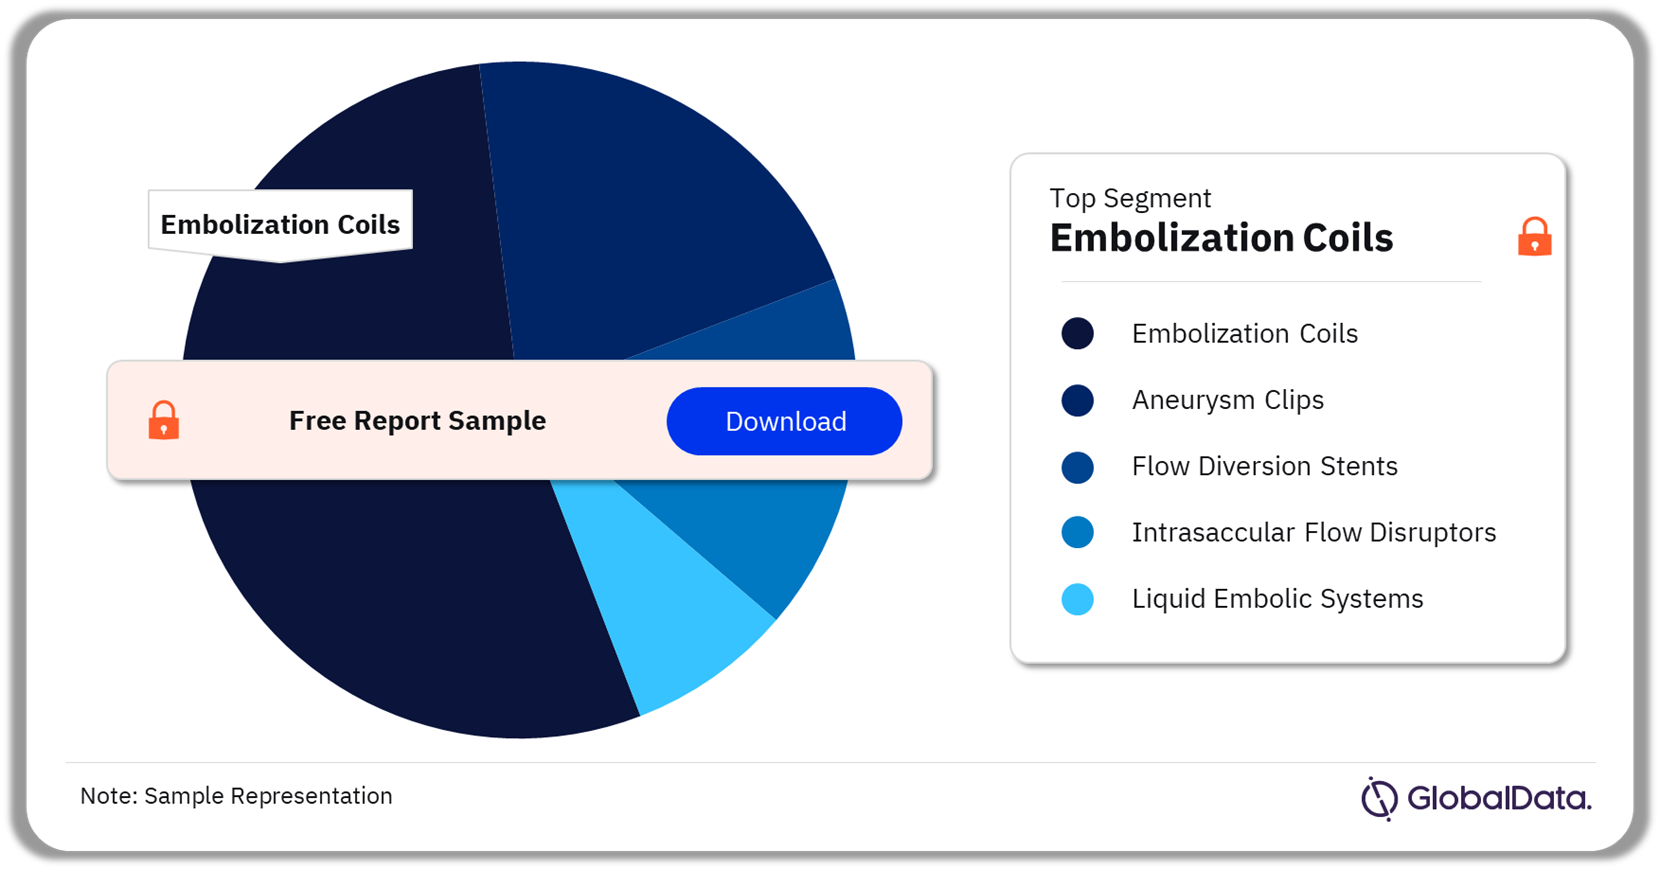 Neurovascular Embolization Devices Market Analysis by Segments, 2023 (%)